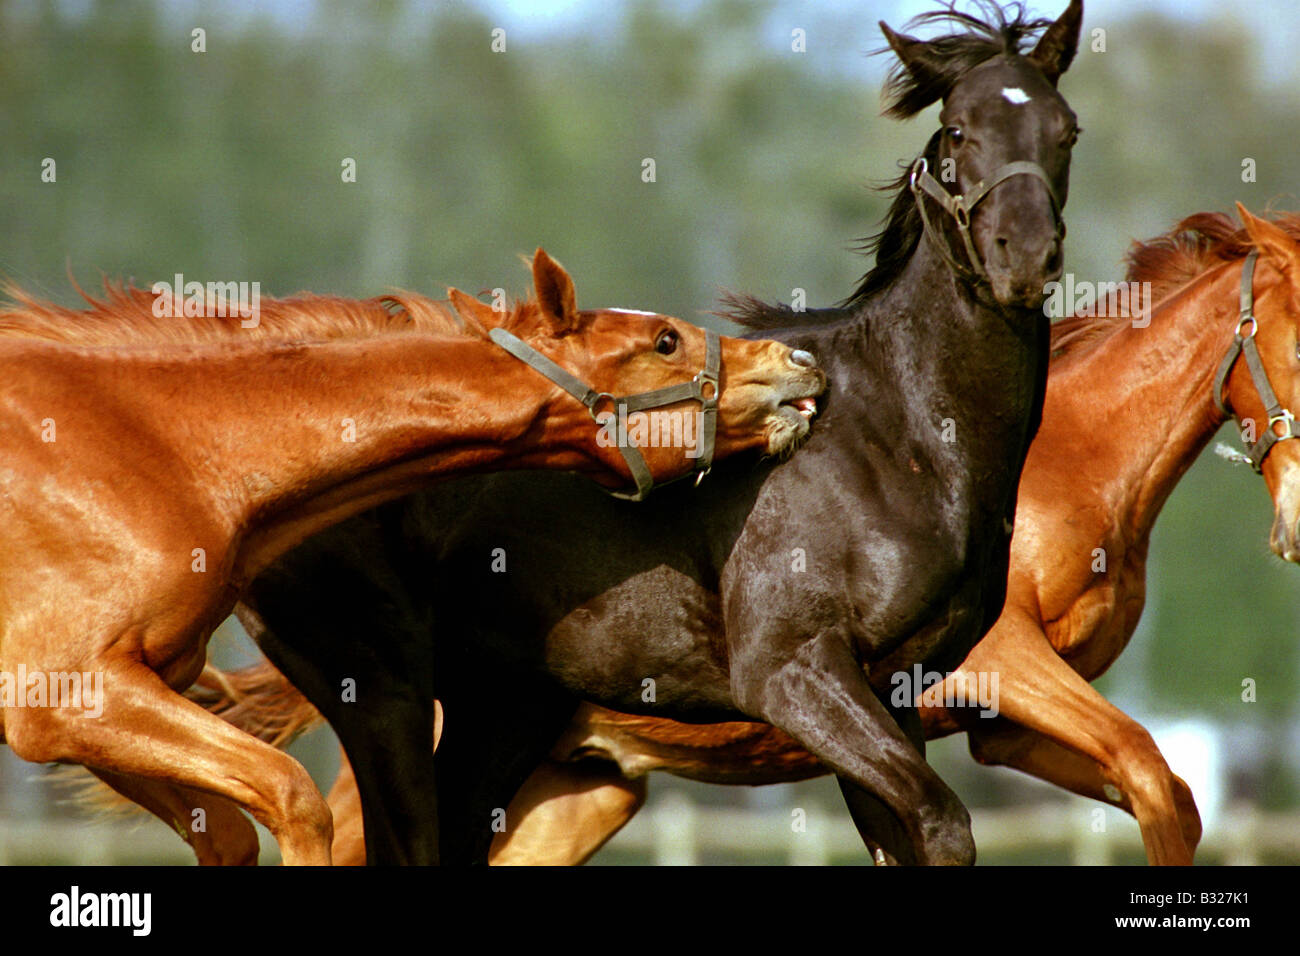 Young horses running, Goerlsdorf, Germany Stock Photo